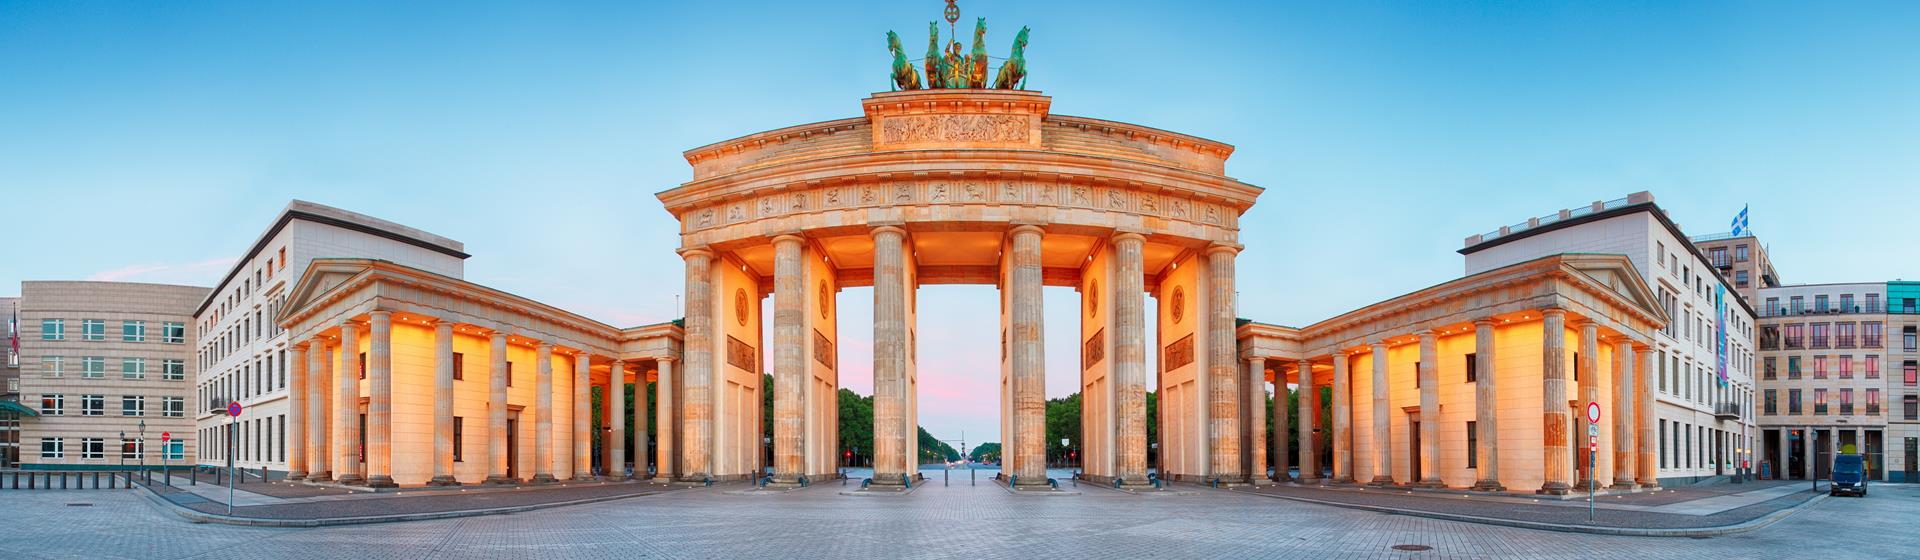 Holidays & City Breaks to Berlin